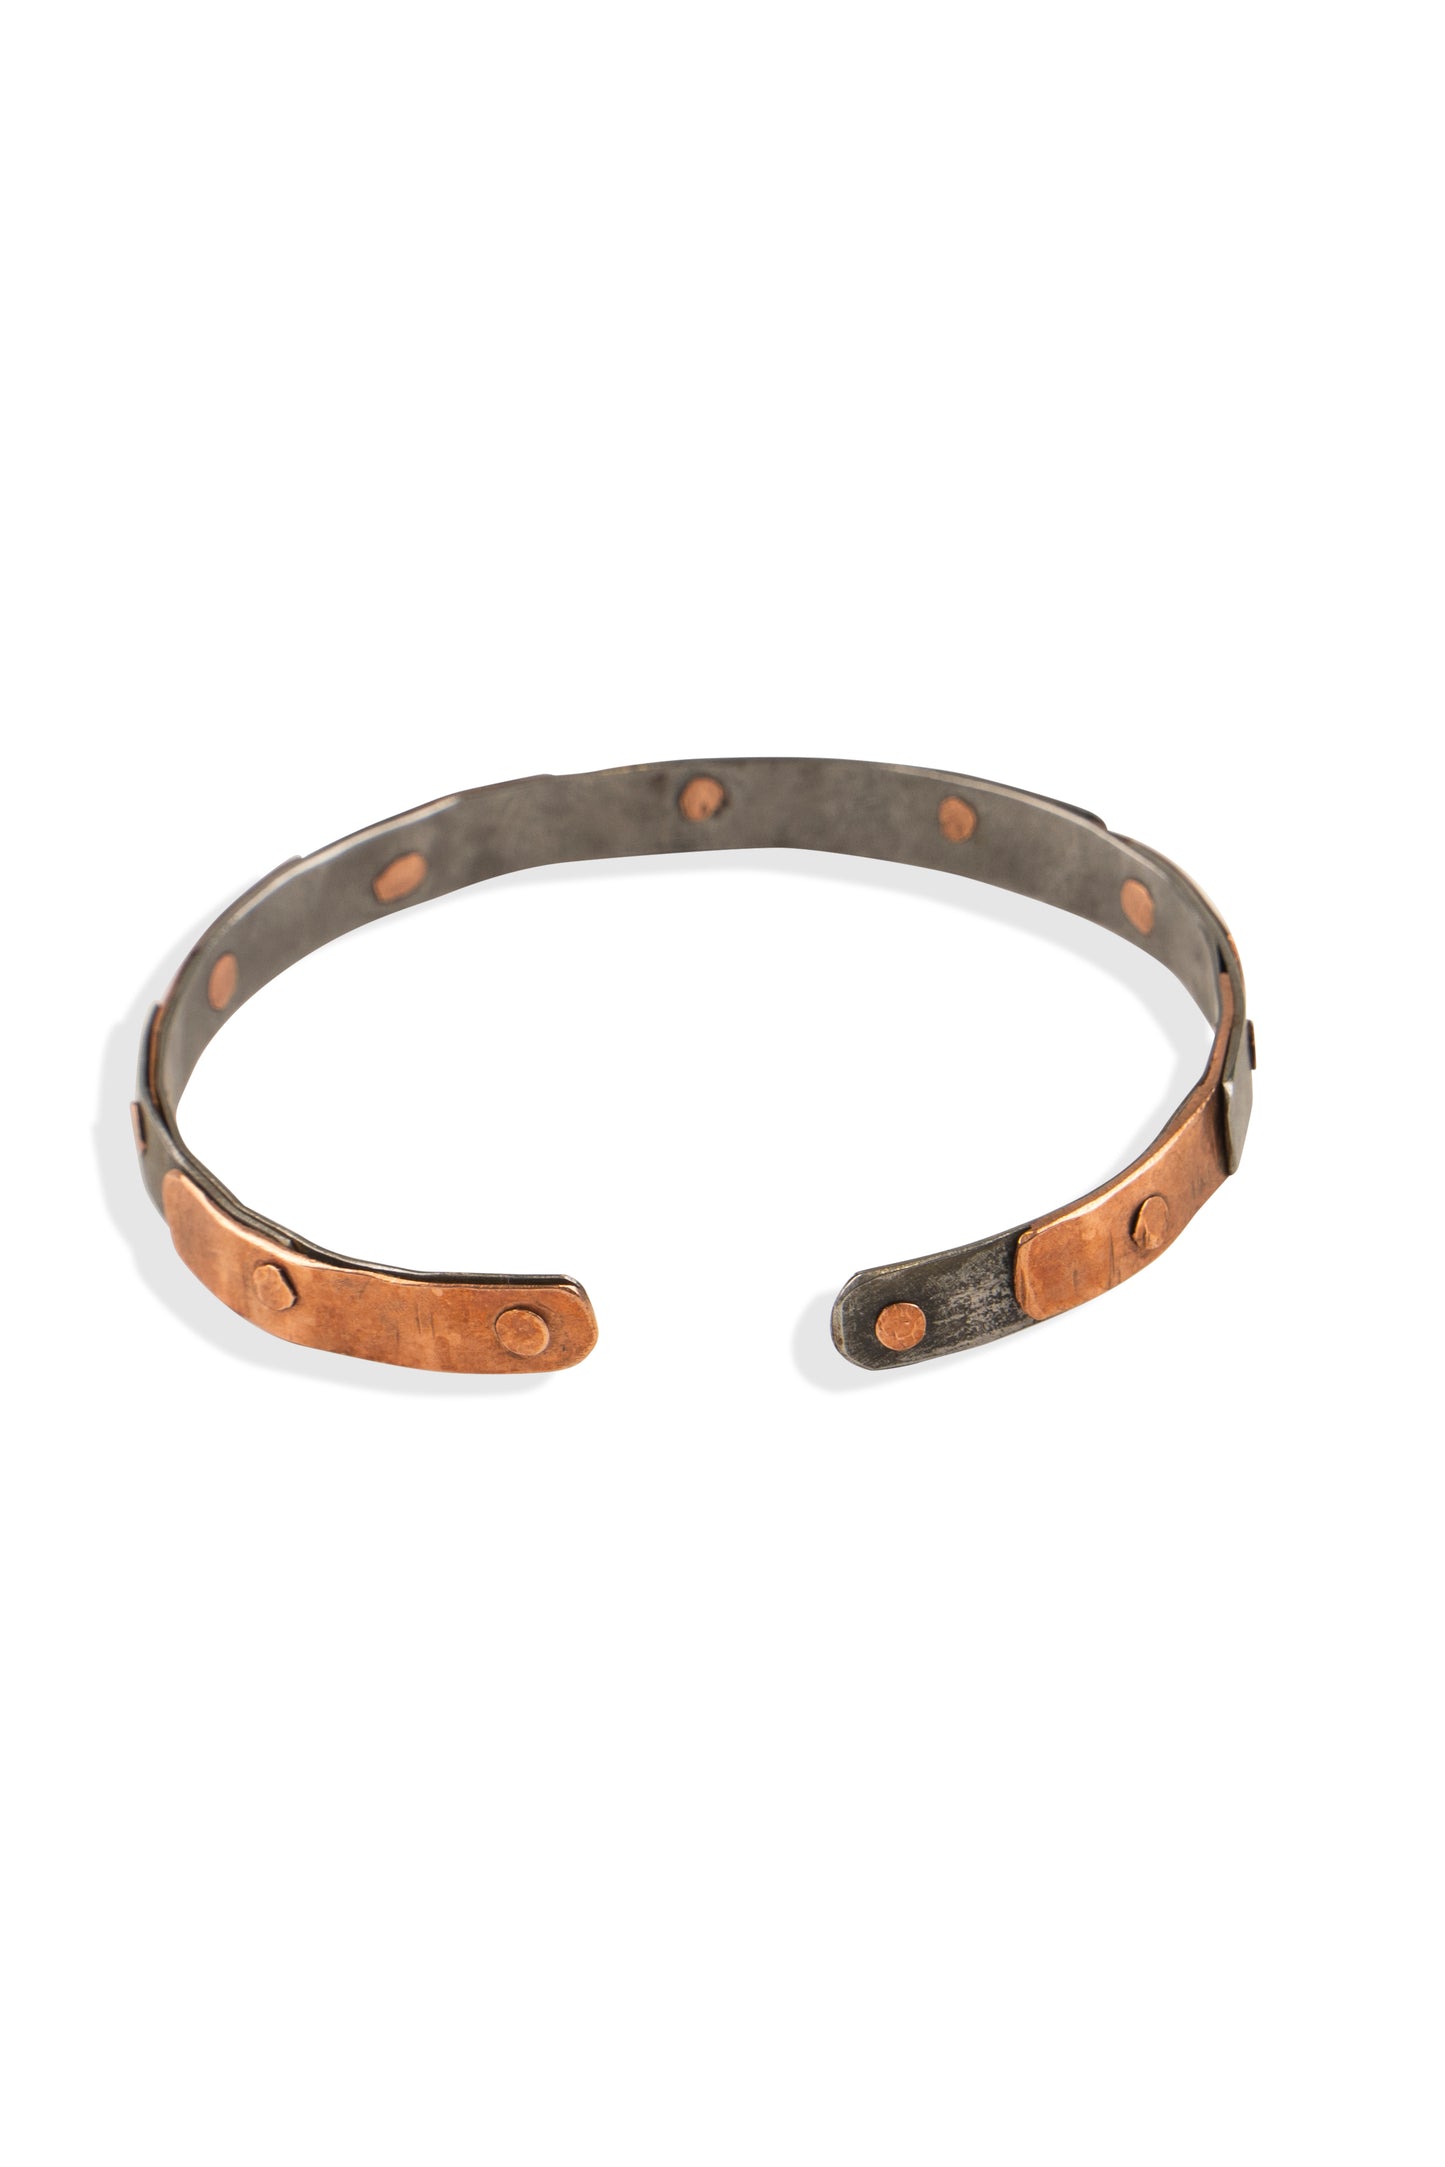 Pangolin conservation bracelet in copper & silver